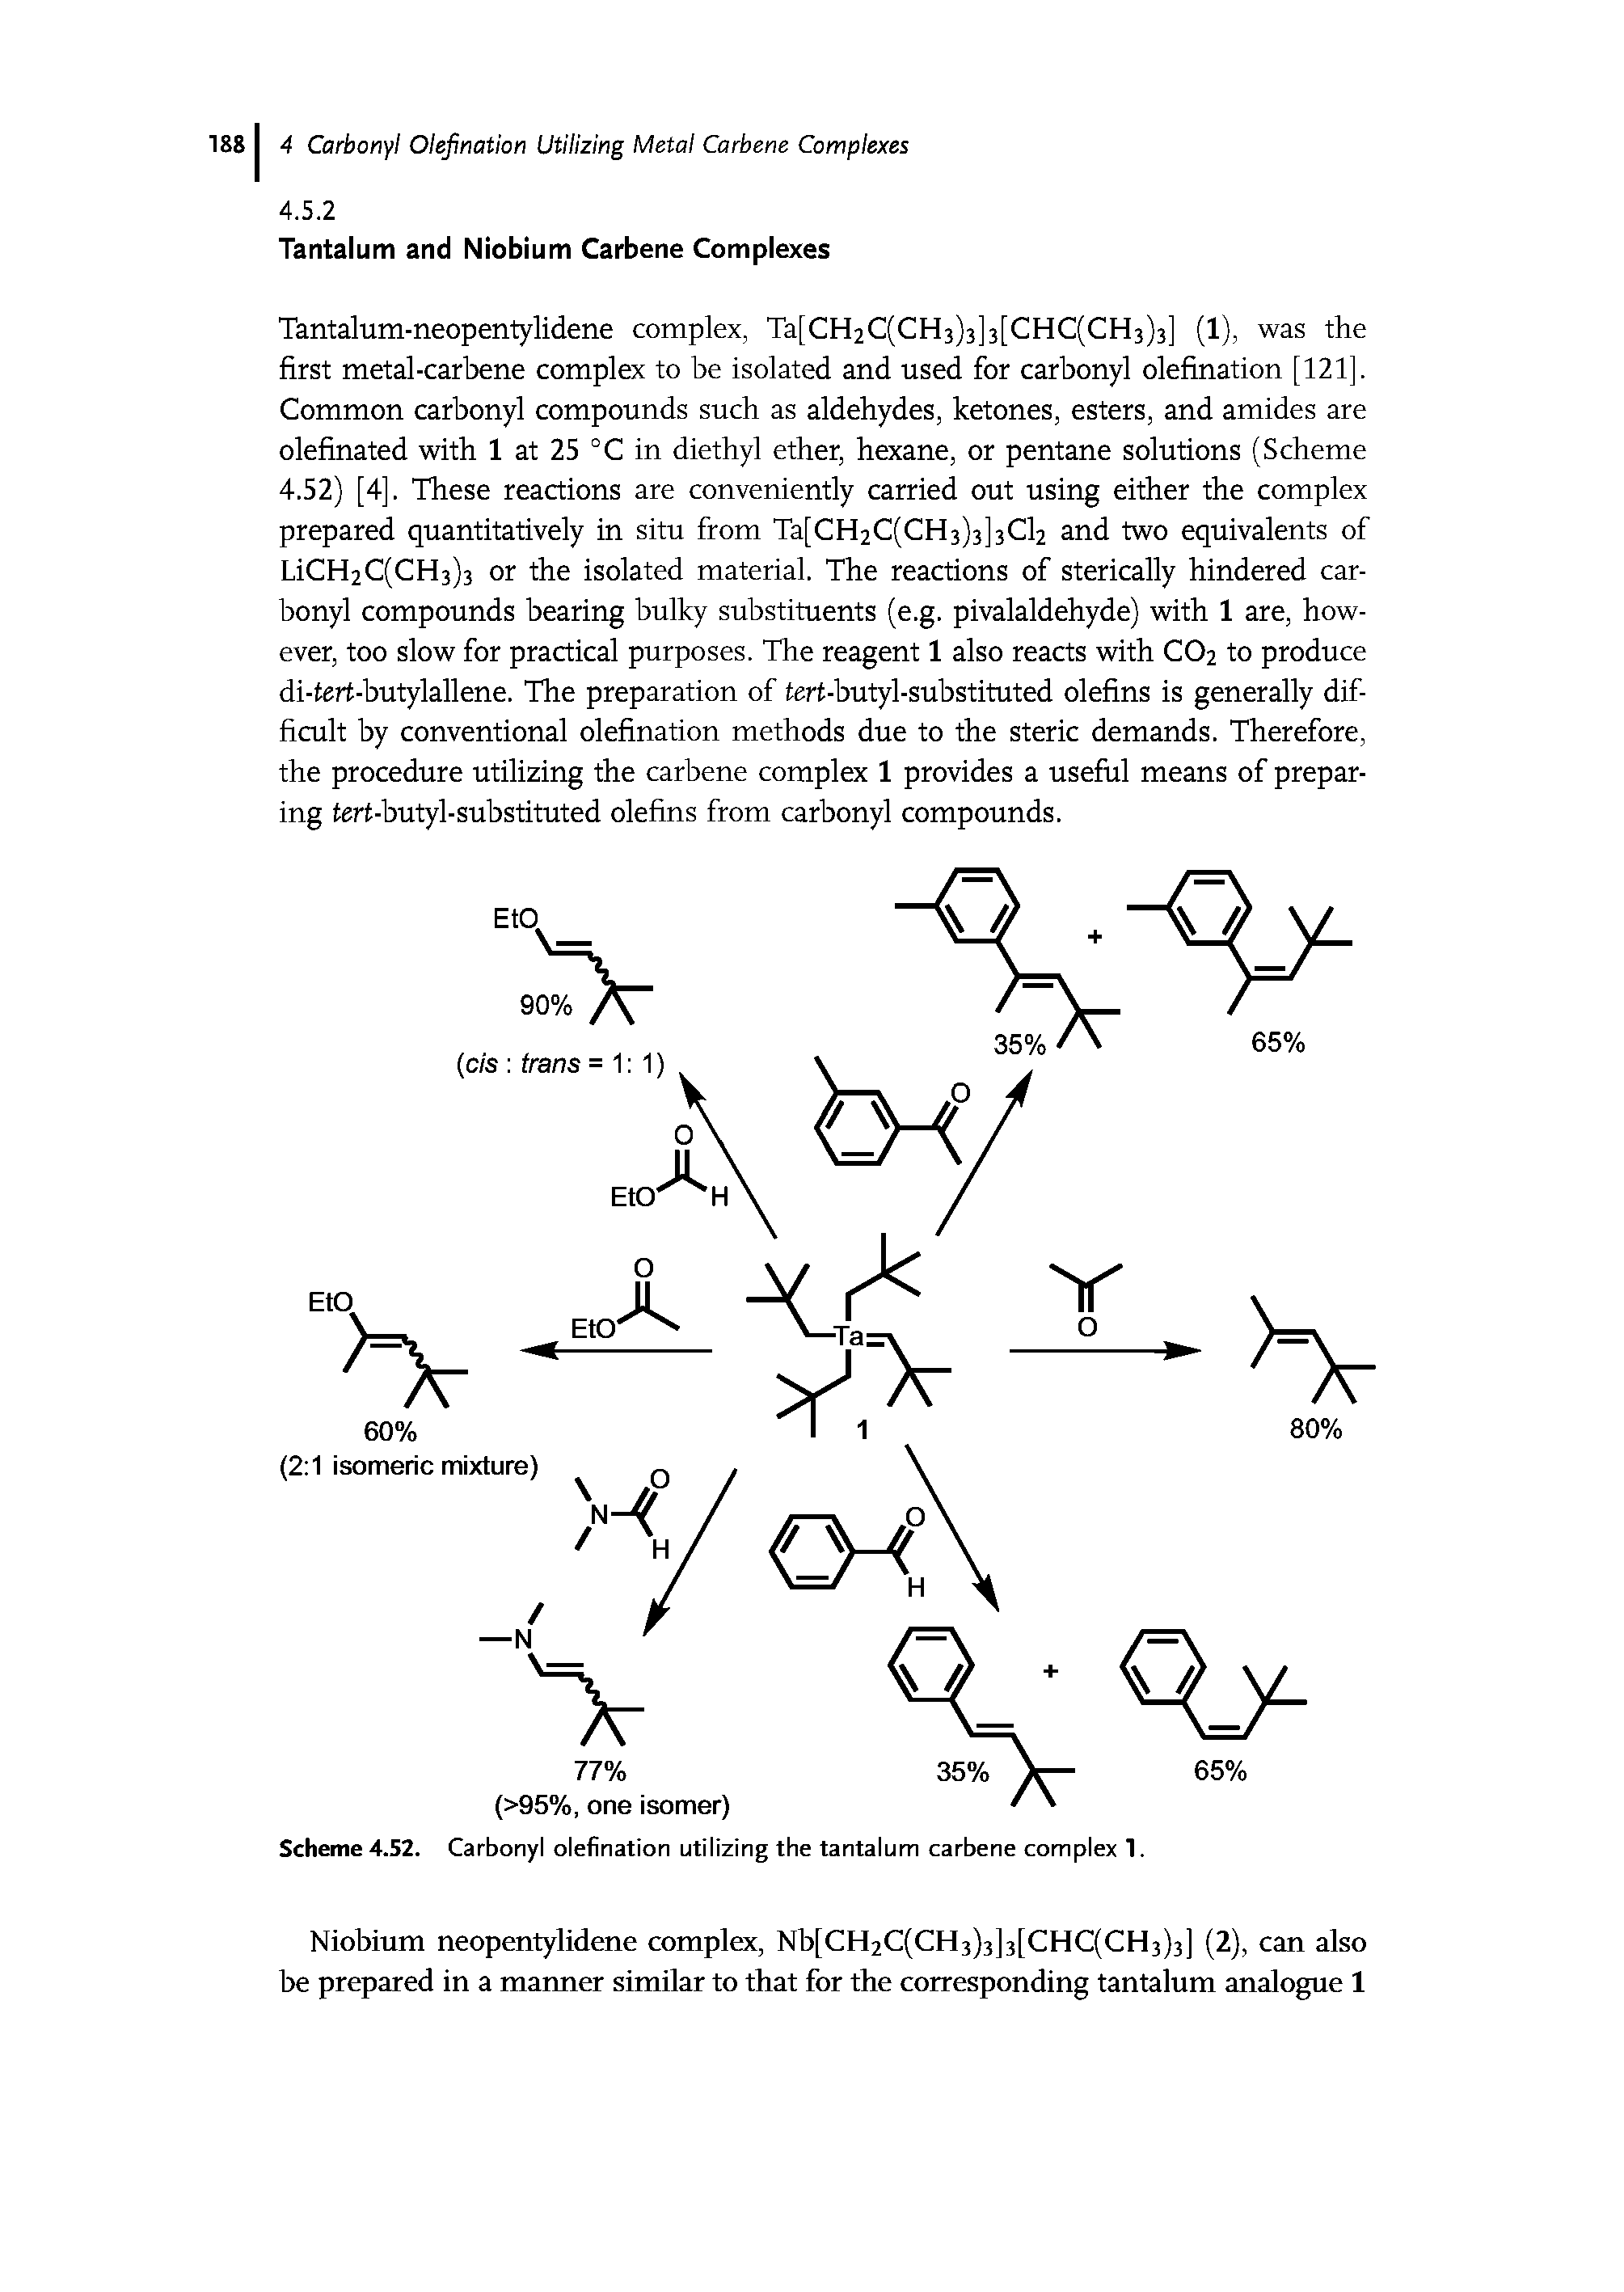 Scheme 4.52. Carbonyl olefination utilizing the tantalum carbene complex 1.